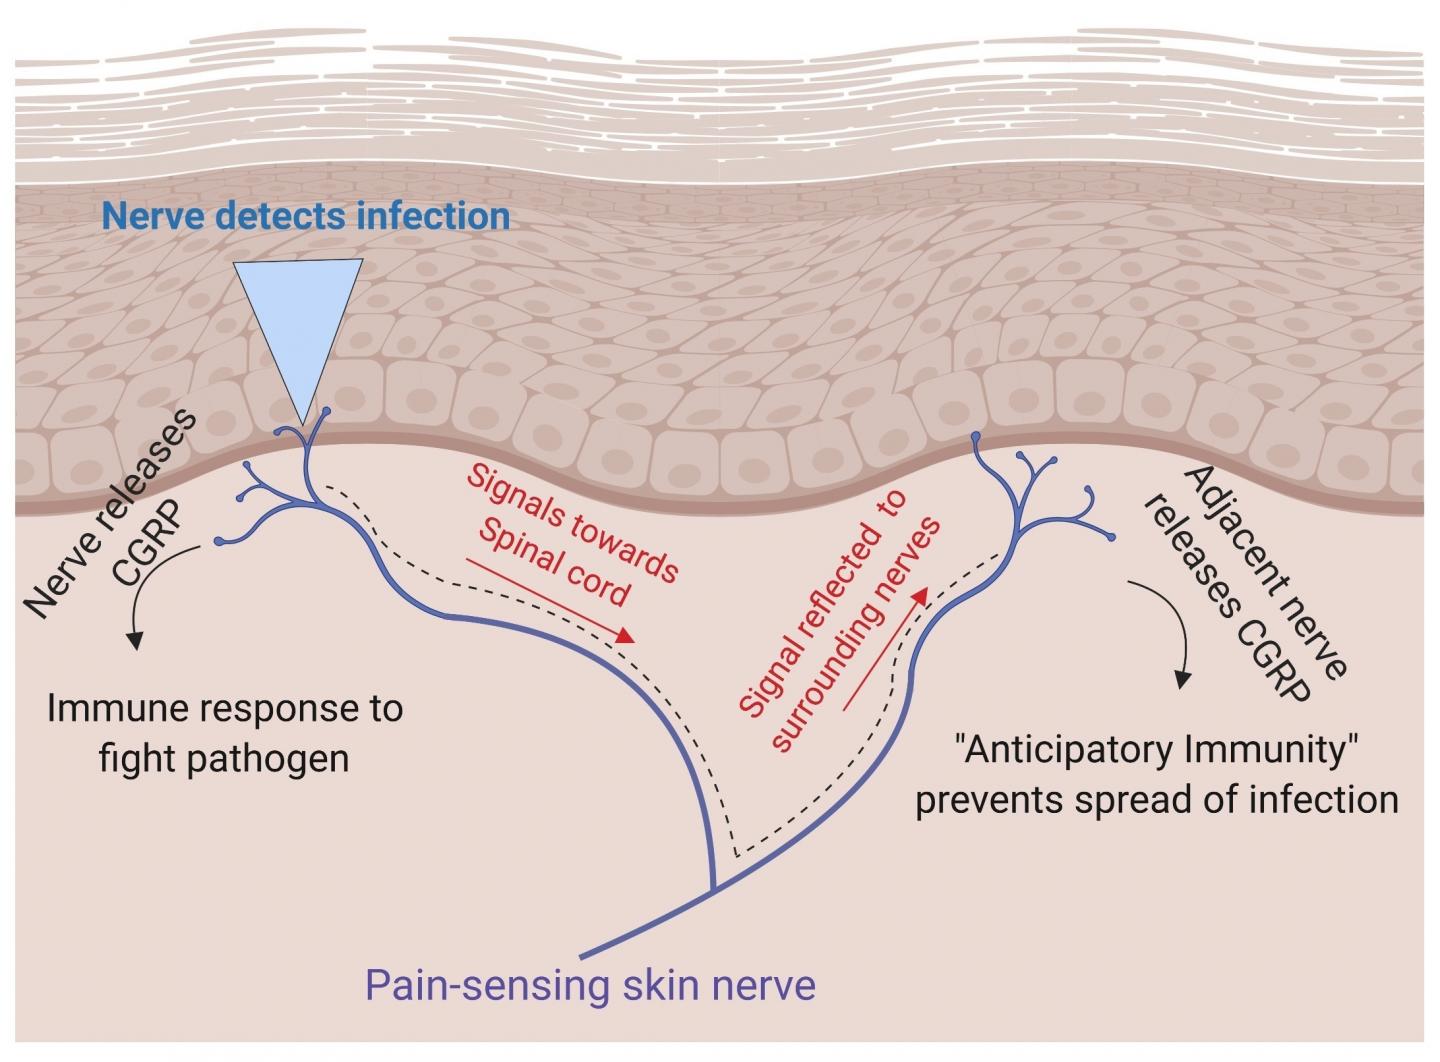 Immunity and Pain-Sensing Skin Nerves in Mice